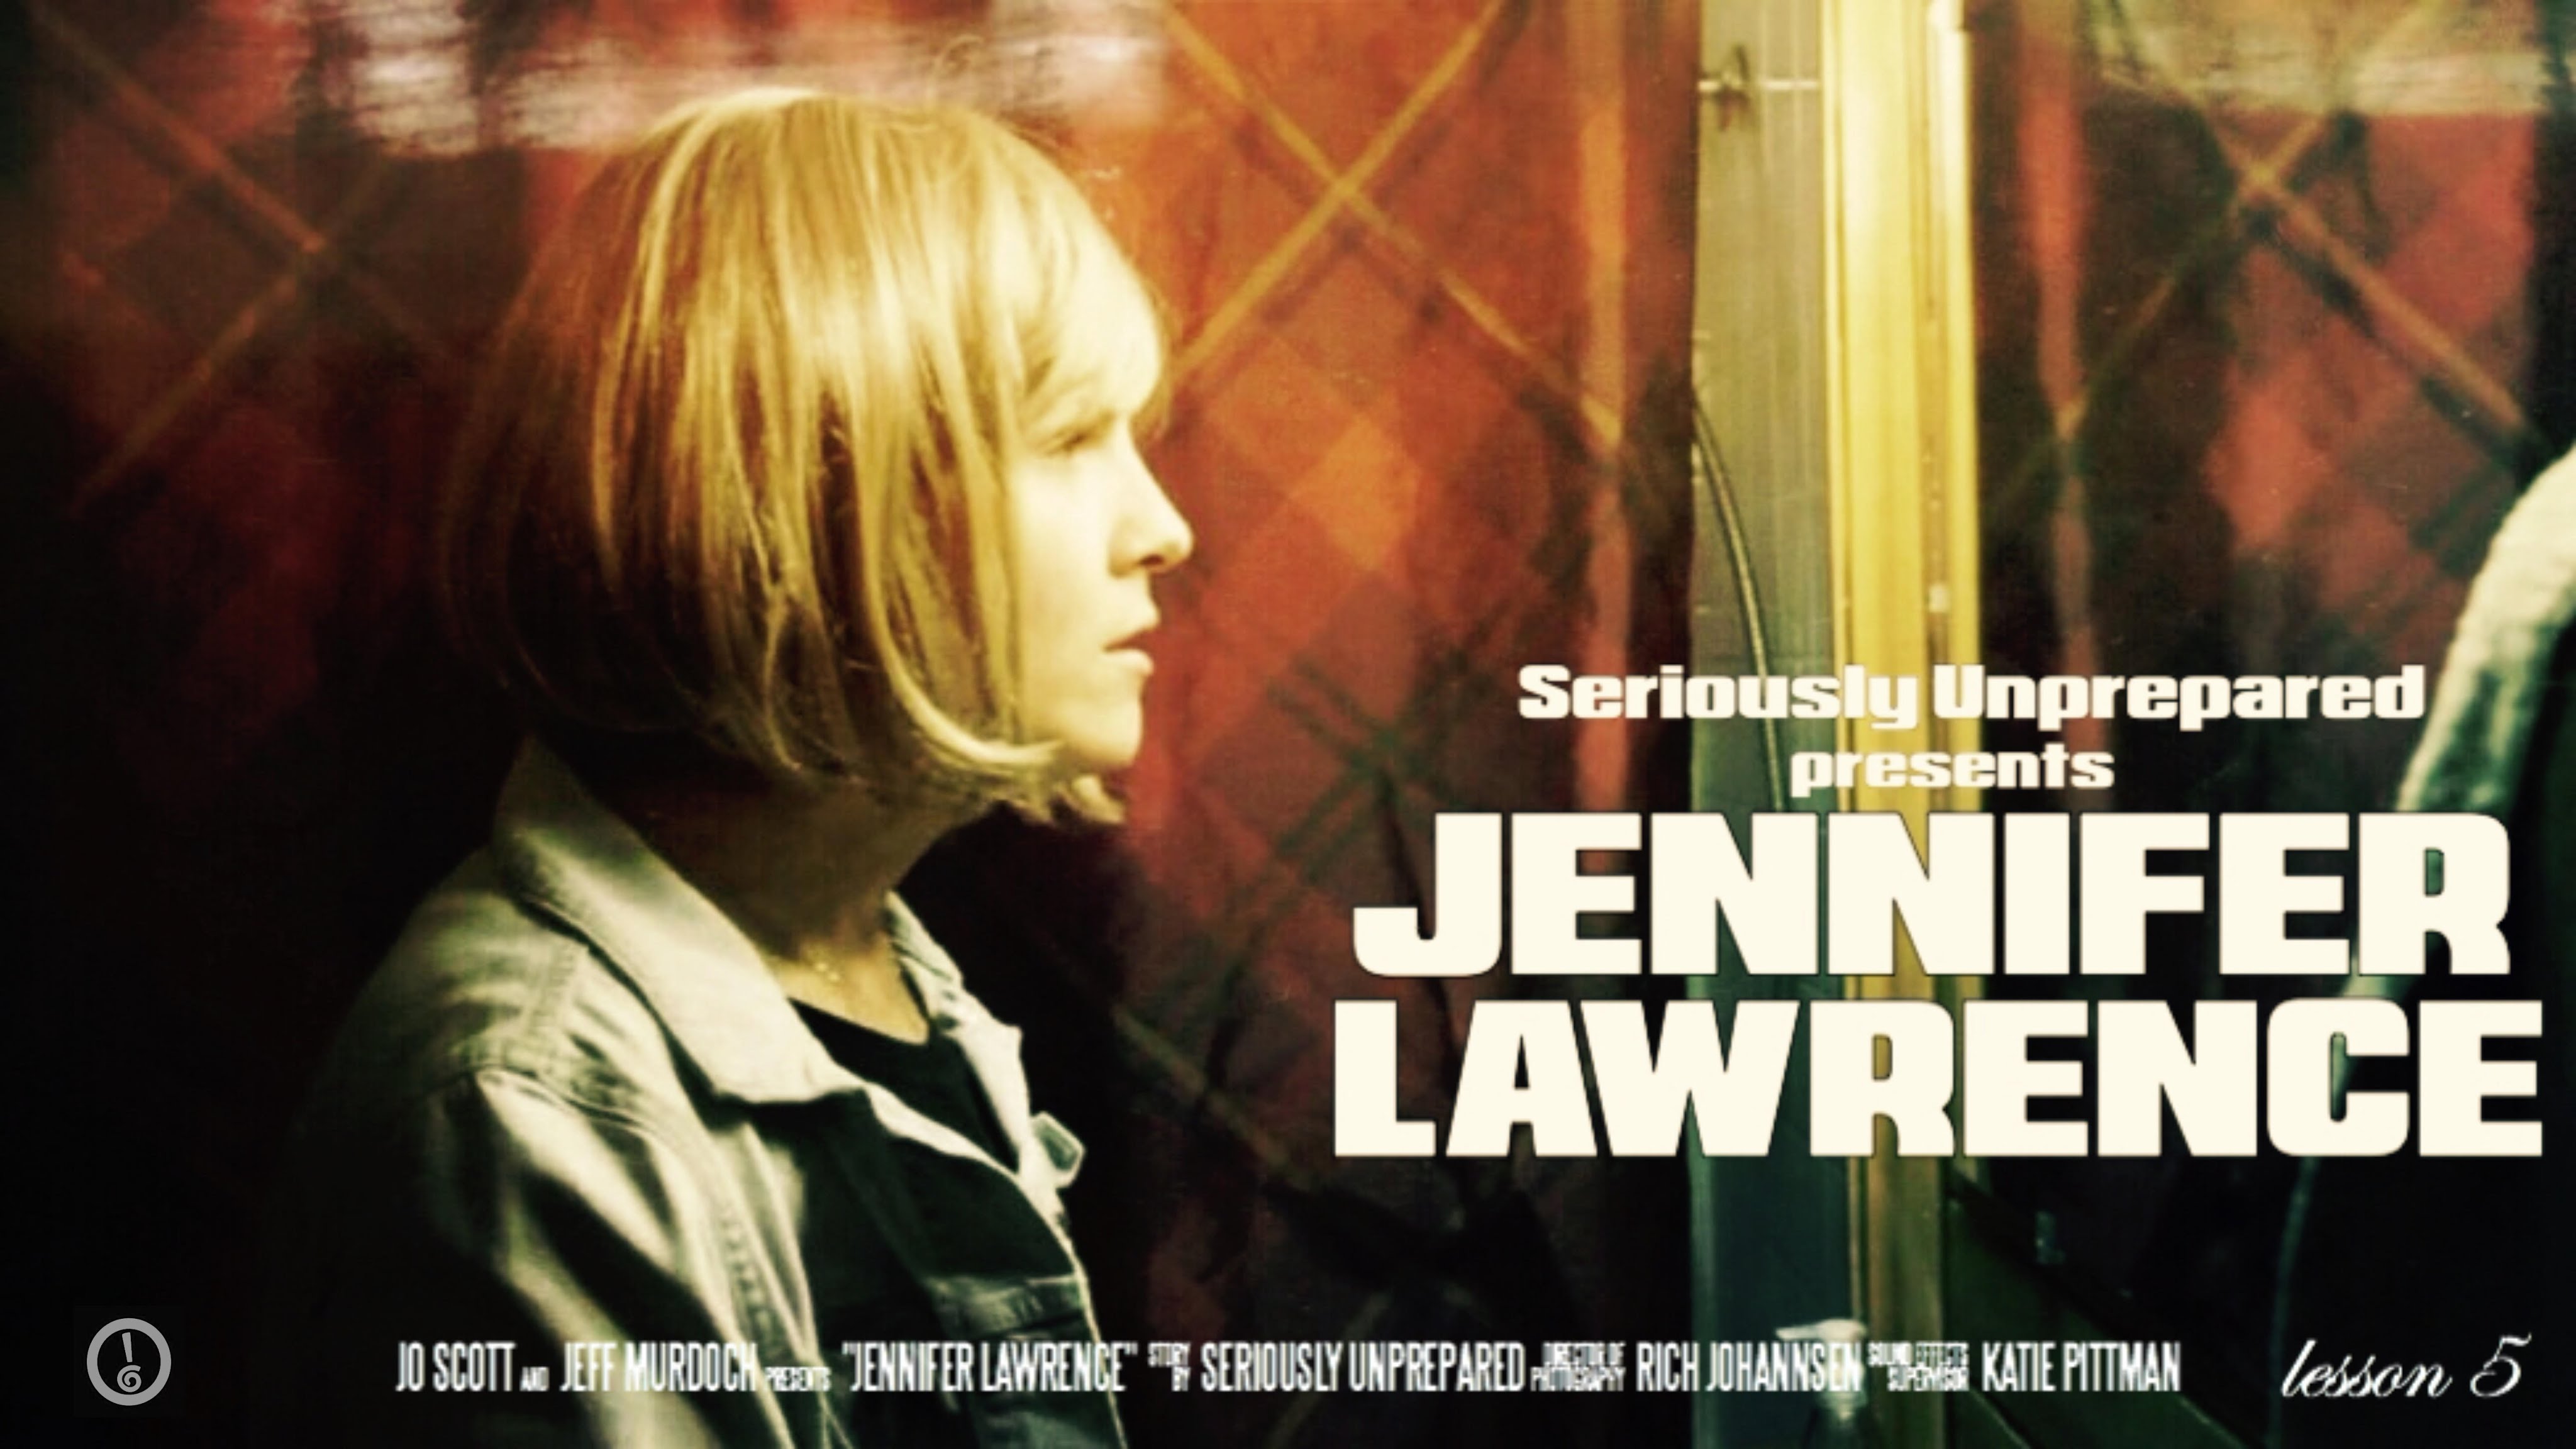 Seriously Unprepared Presents: Jennifer Lawrence